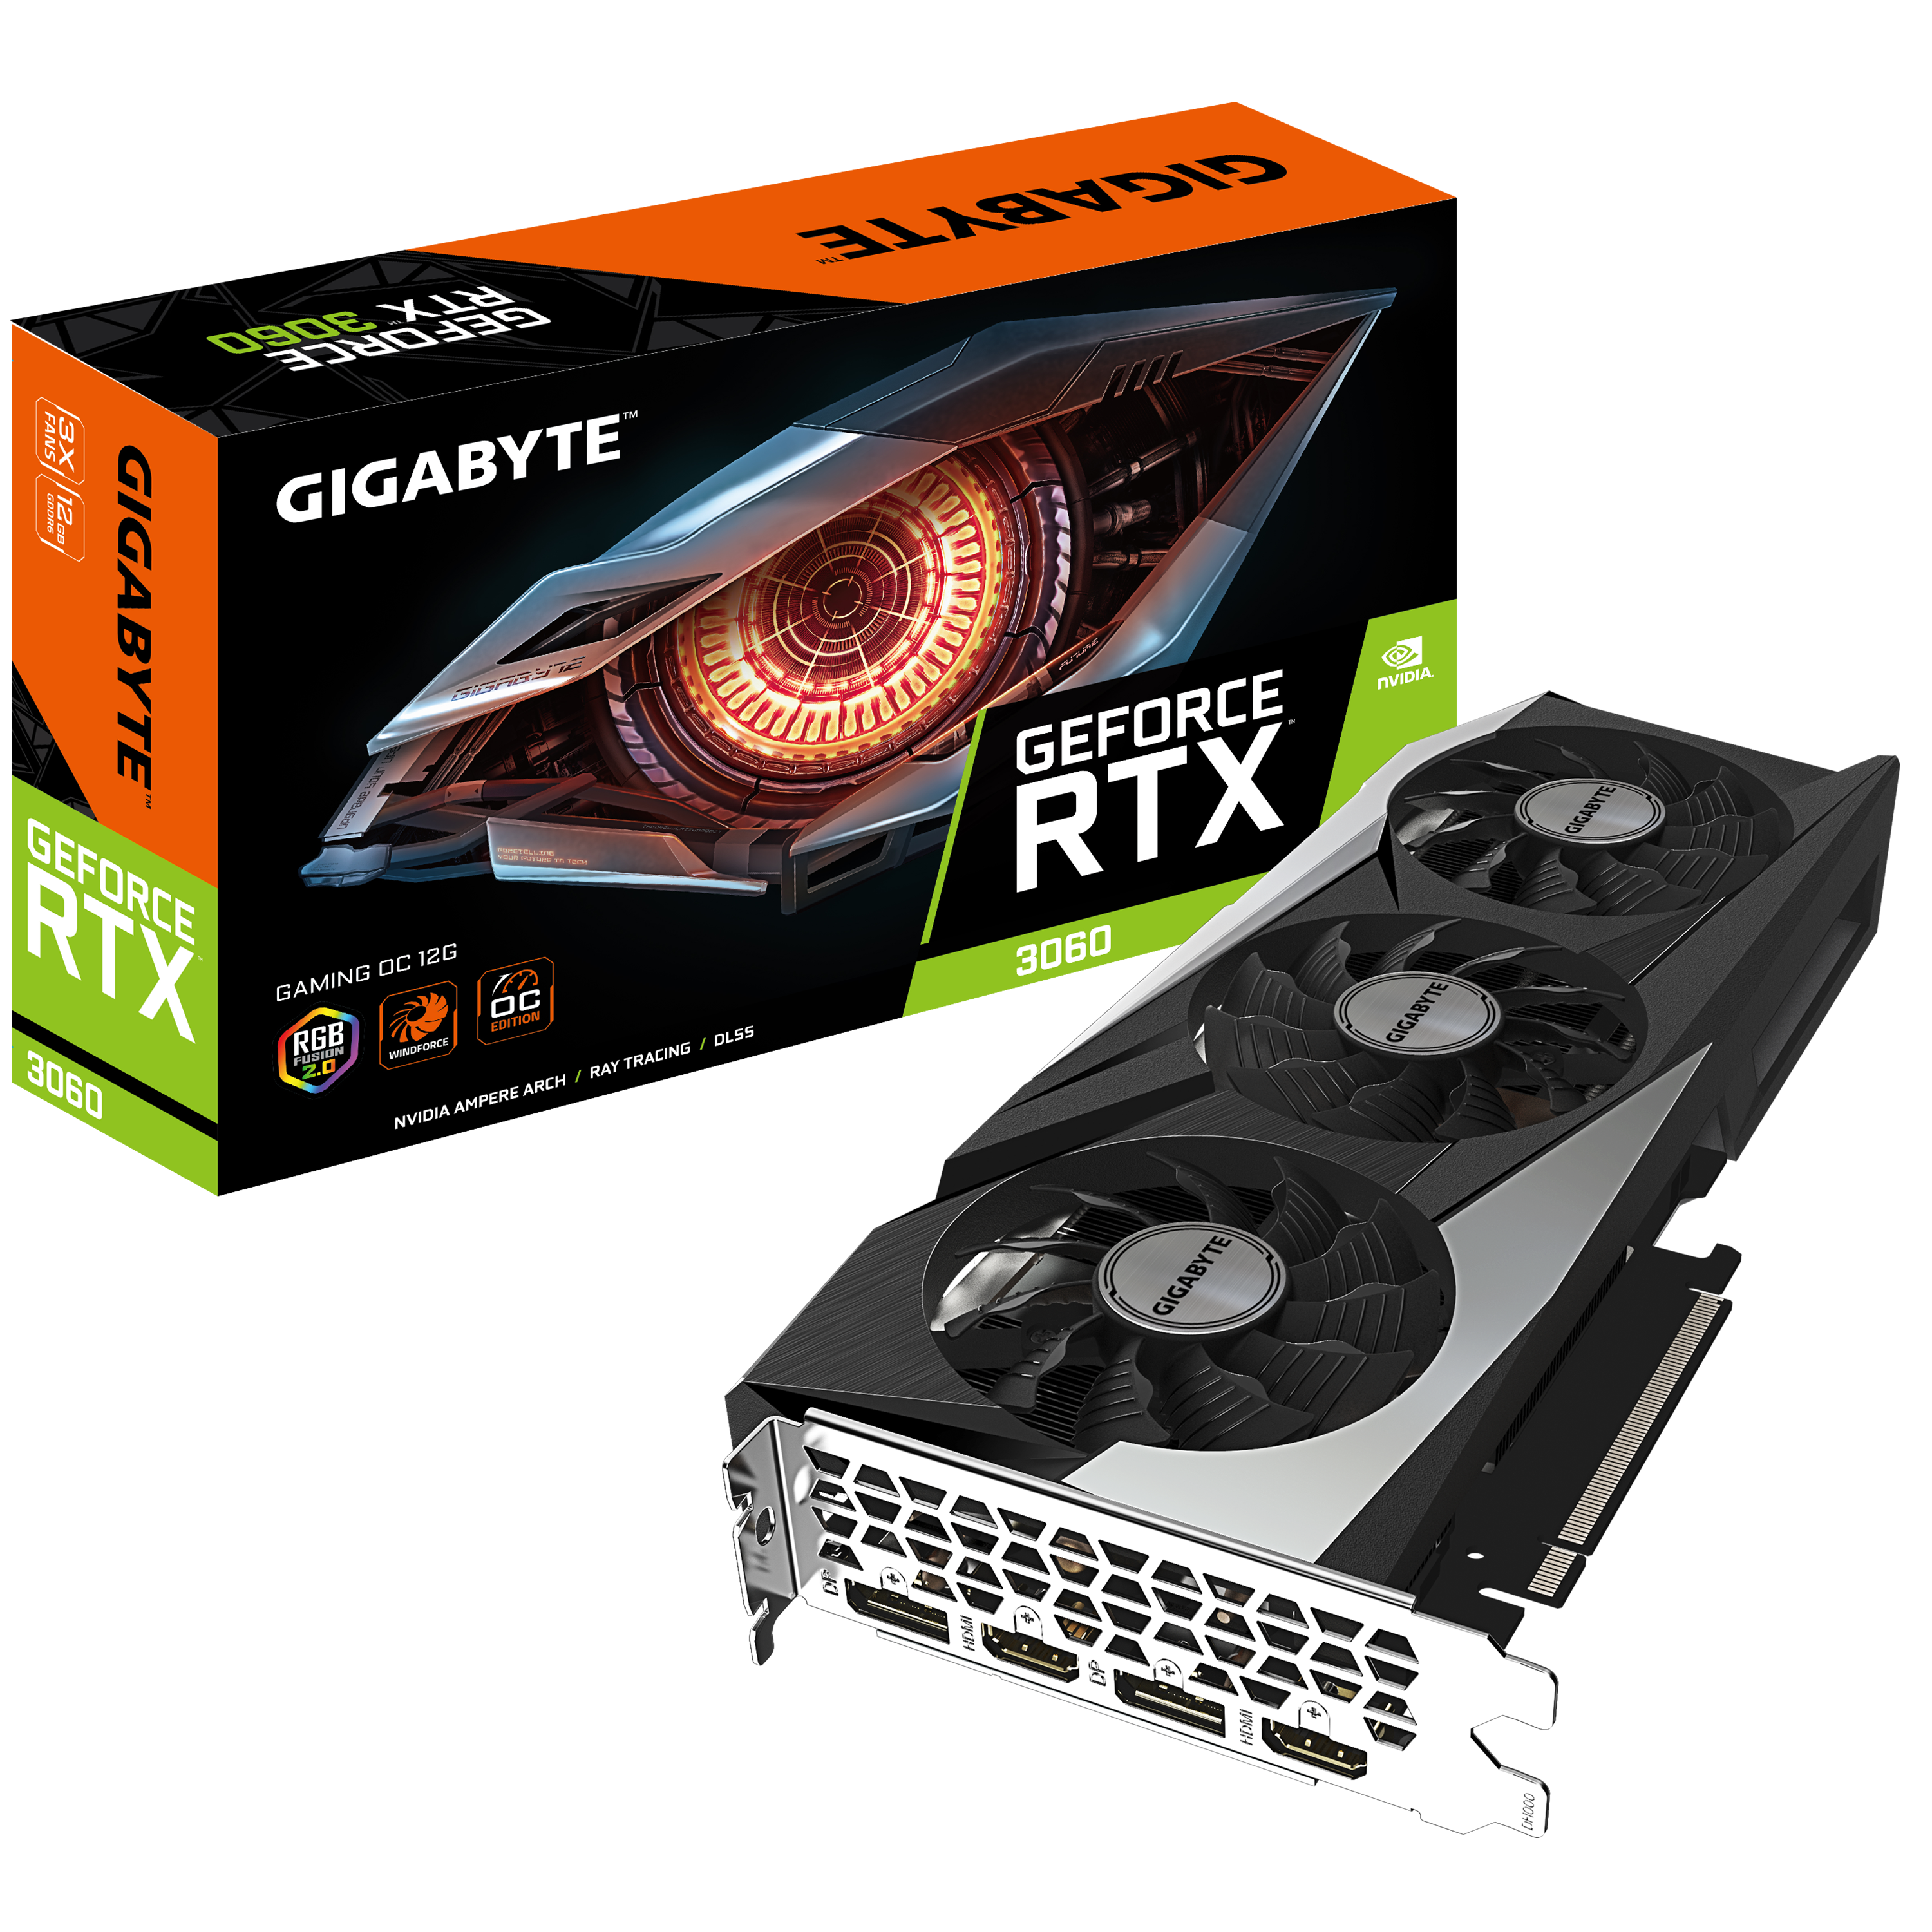 GIGABYTE GeForce RTX 3060 GAMING OC 12G Graphics Card, 3 x